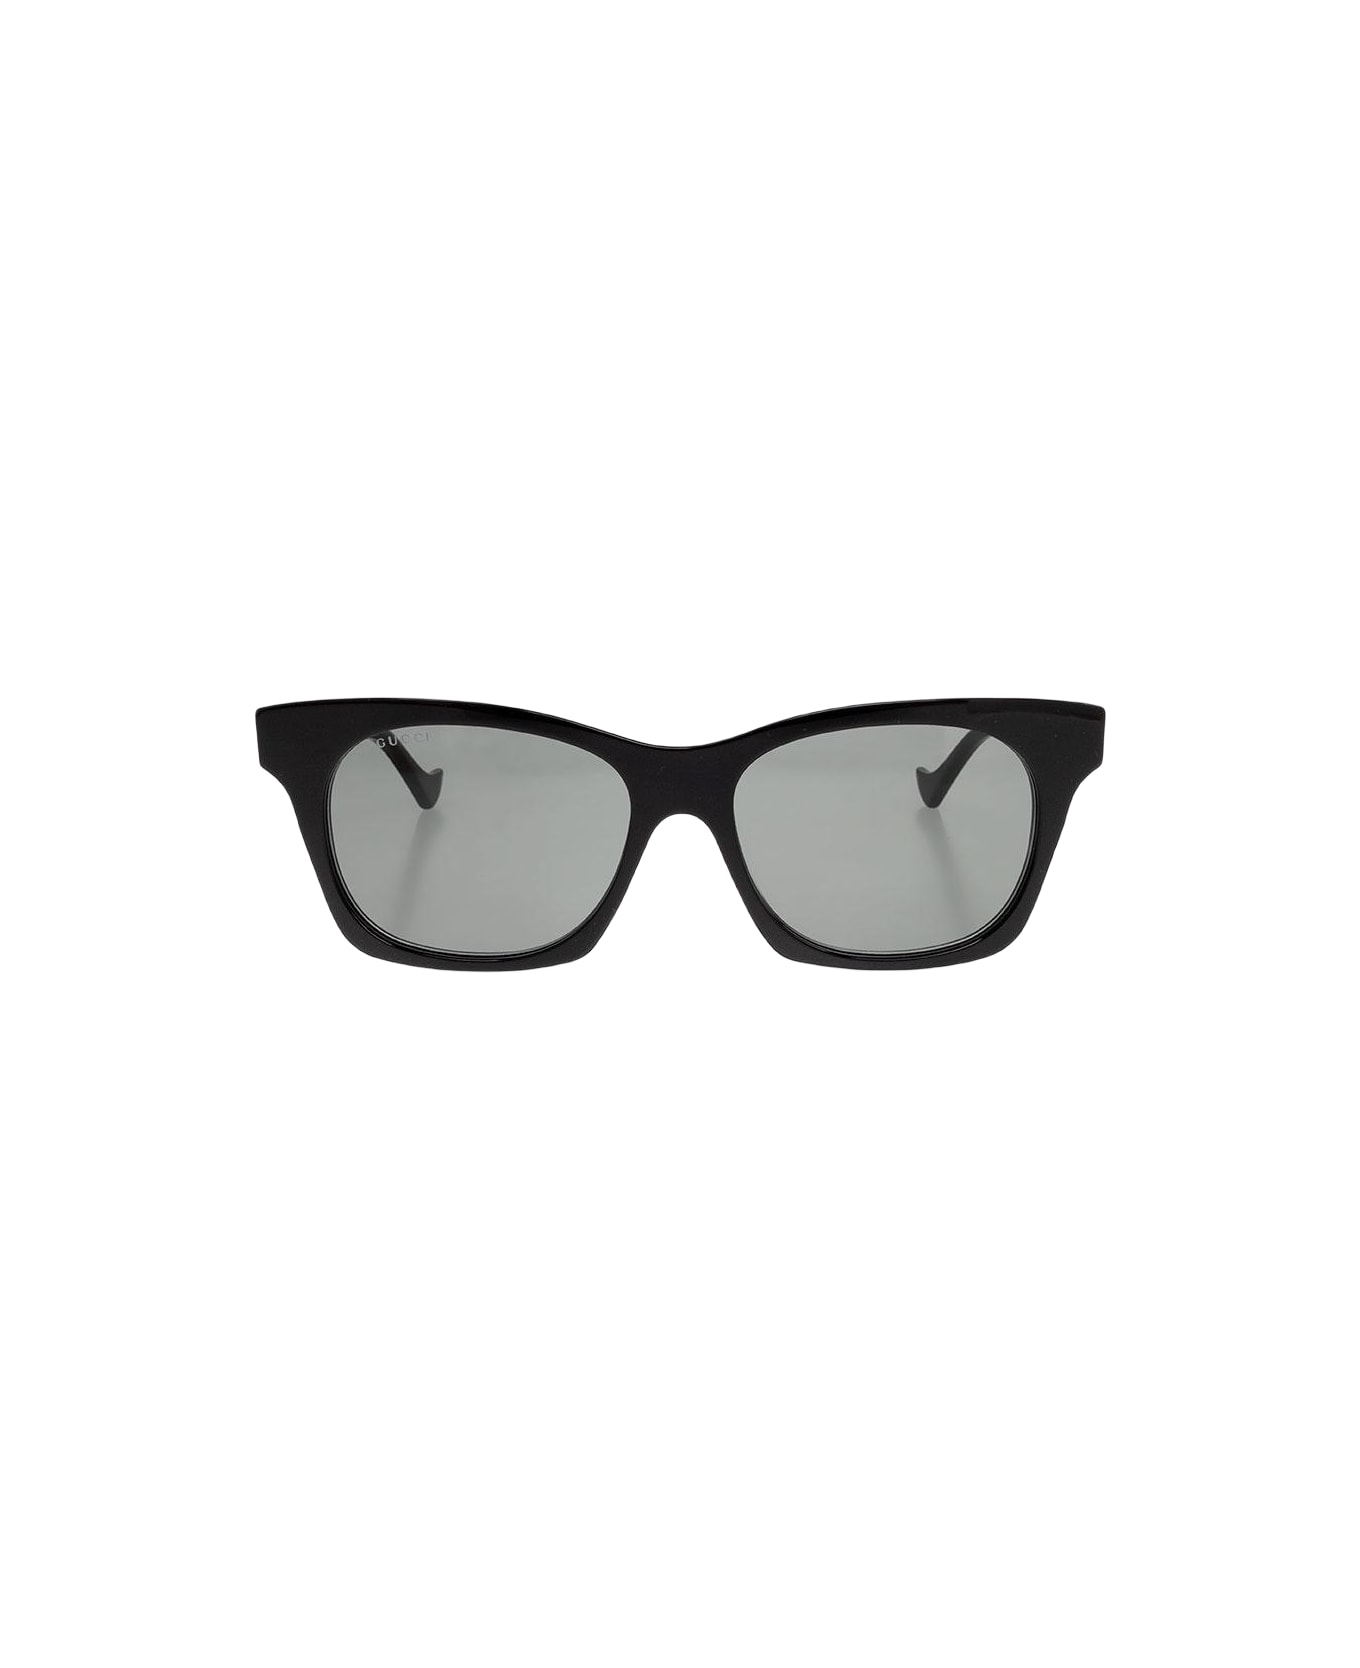 Gucci Eyewear Sunglasses サングラス